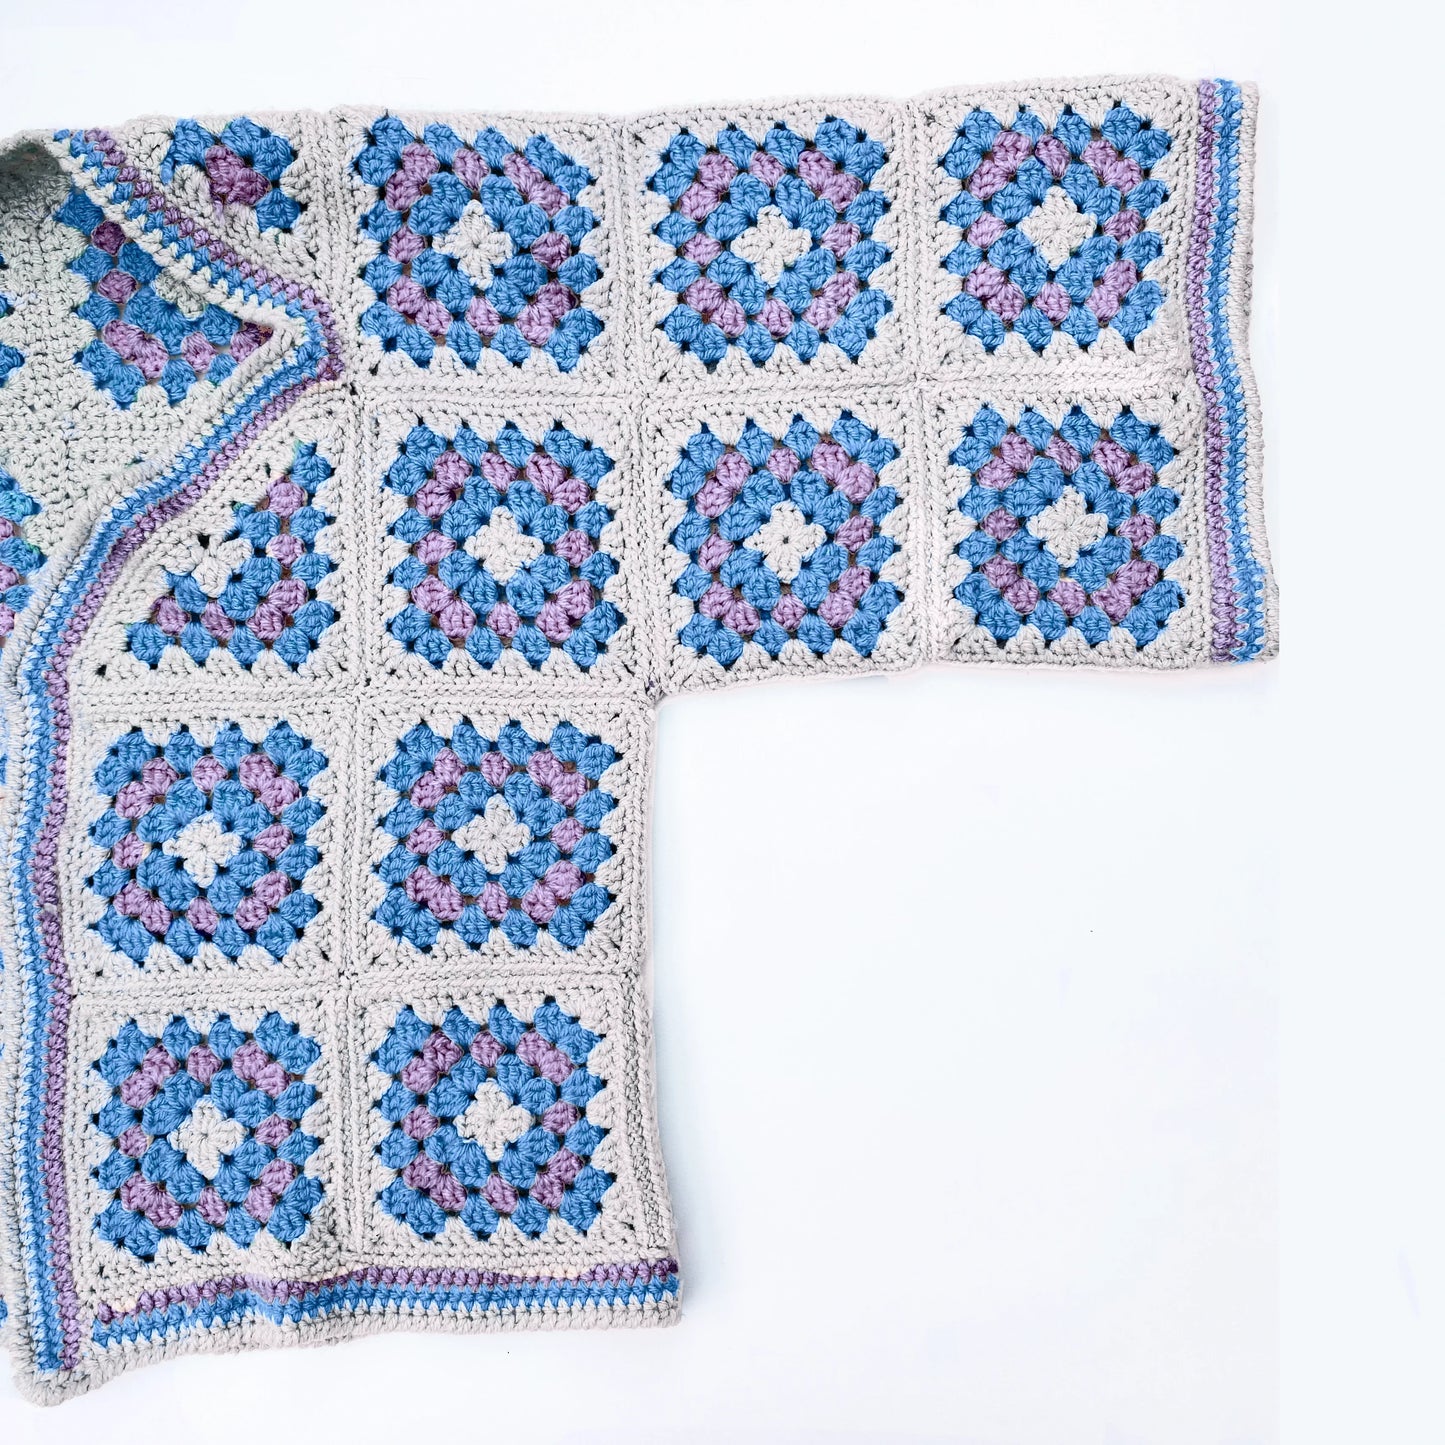 Granny Squares for Beginners Crochet Workshop, Marlborough, 6th April